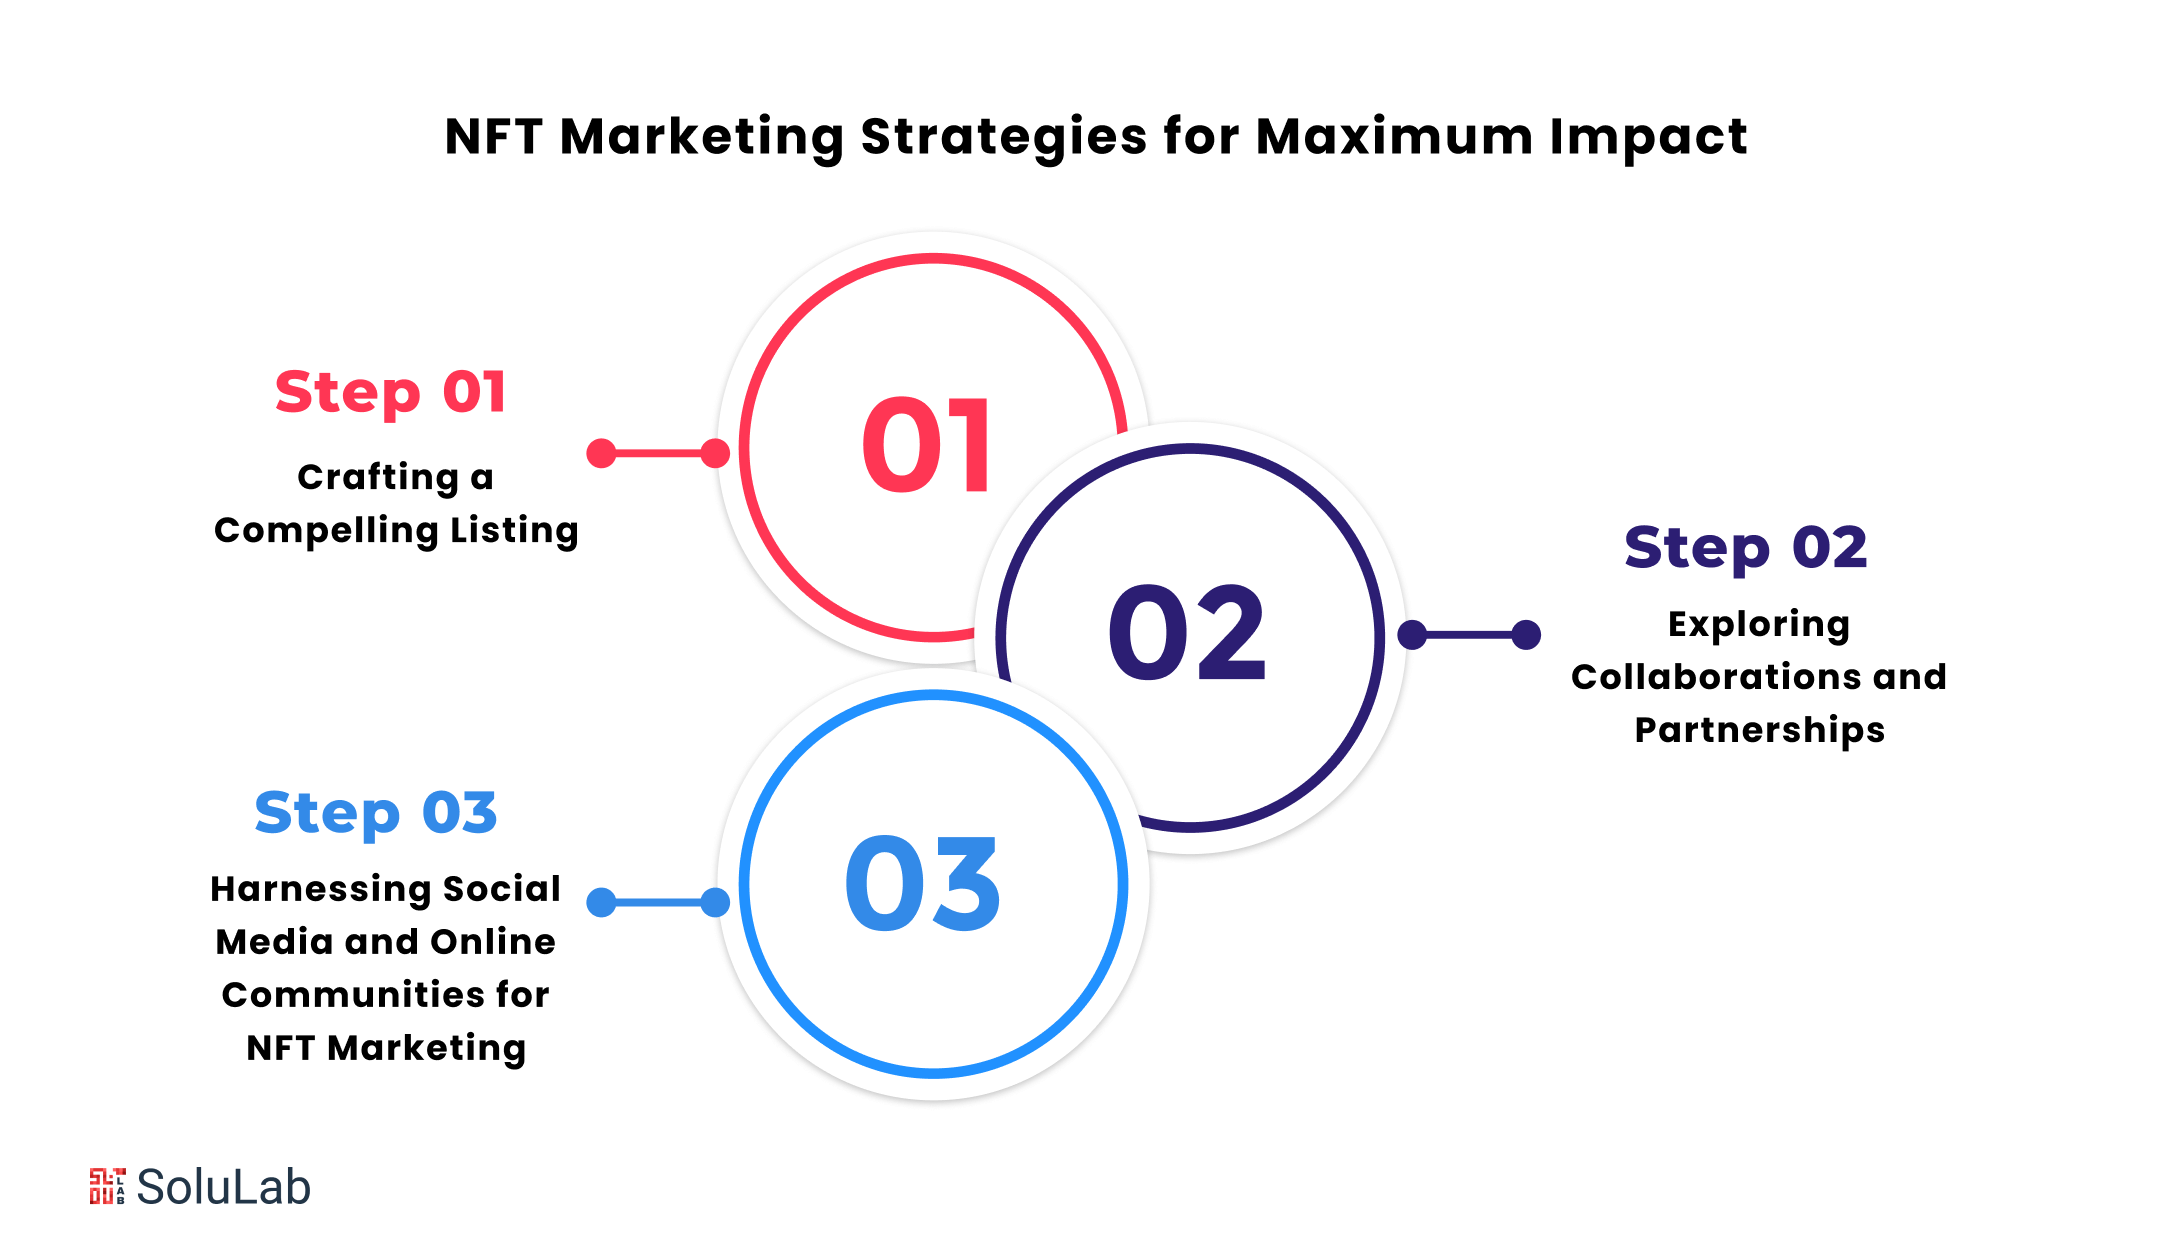 NFT Marketing Strategies for Maximum Impact